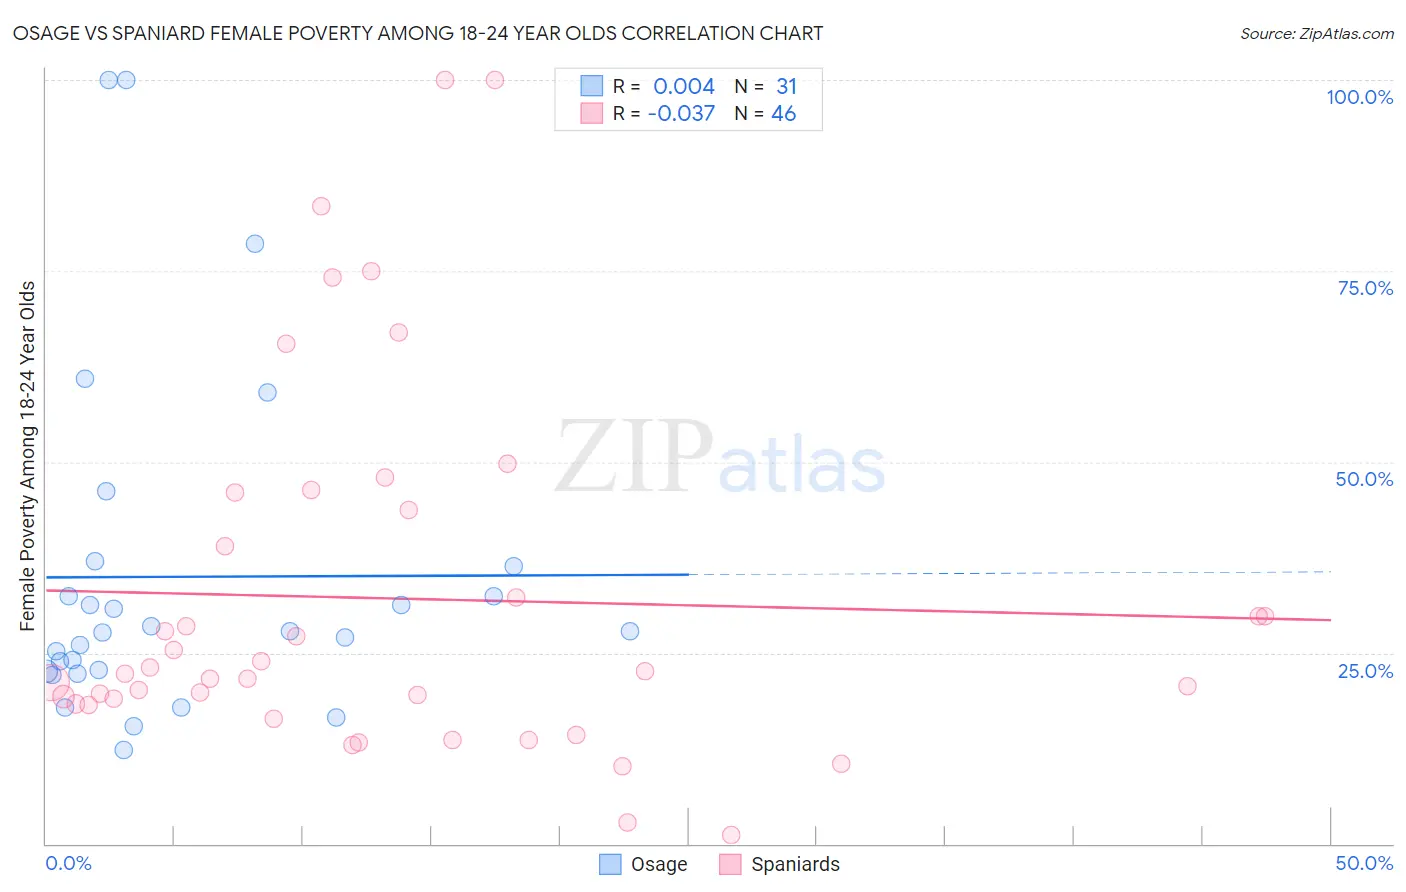 Osage vs Spaniard Female Poverty Among 18-24 Year Olds